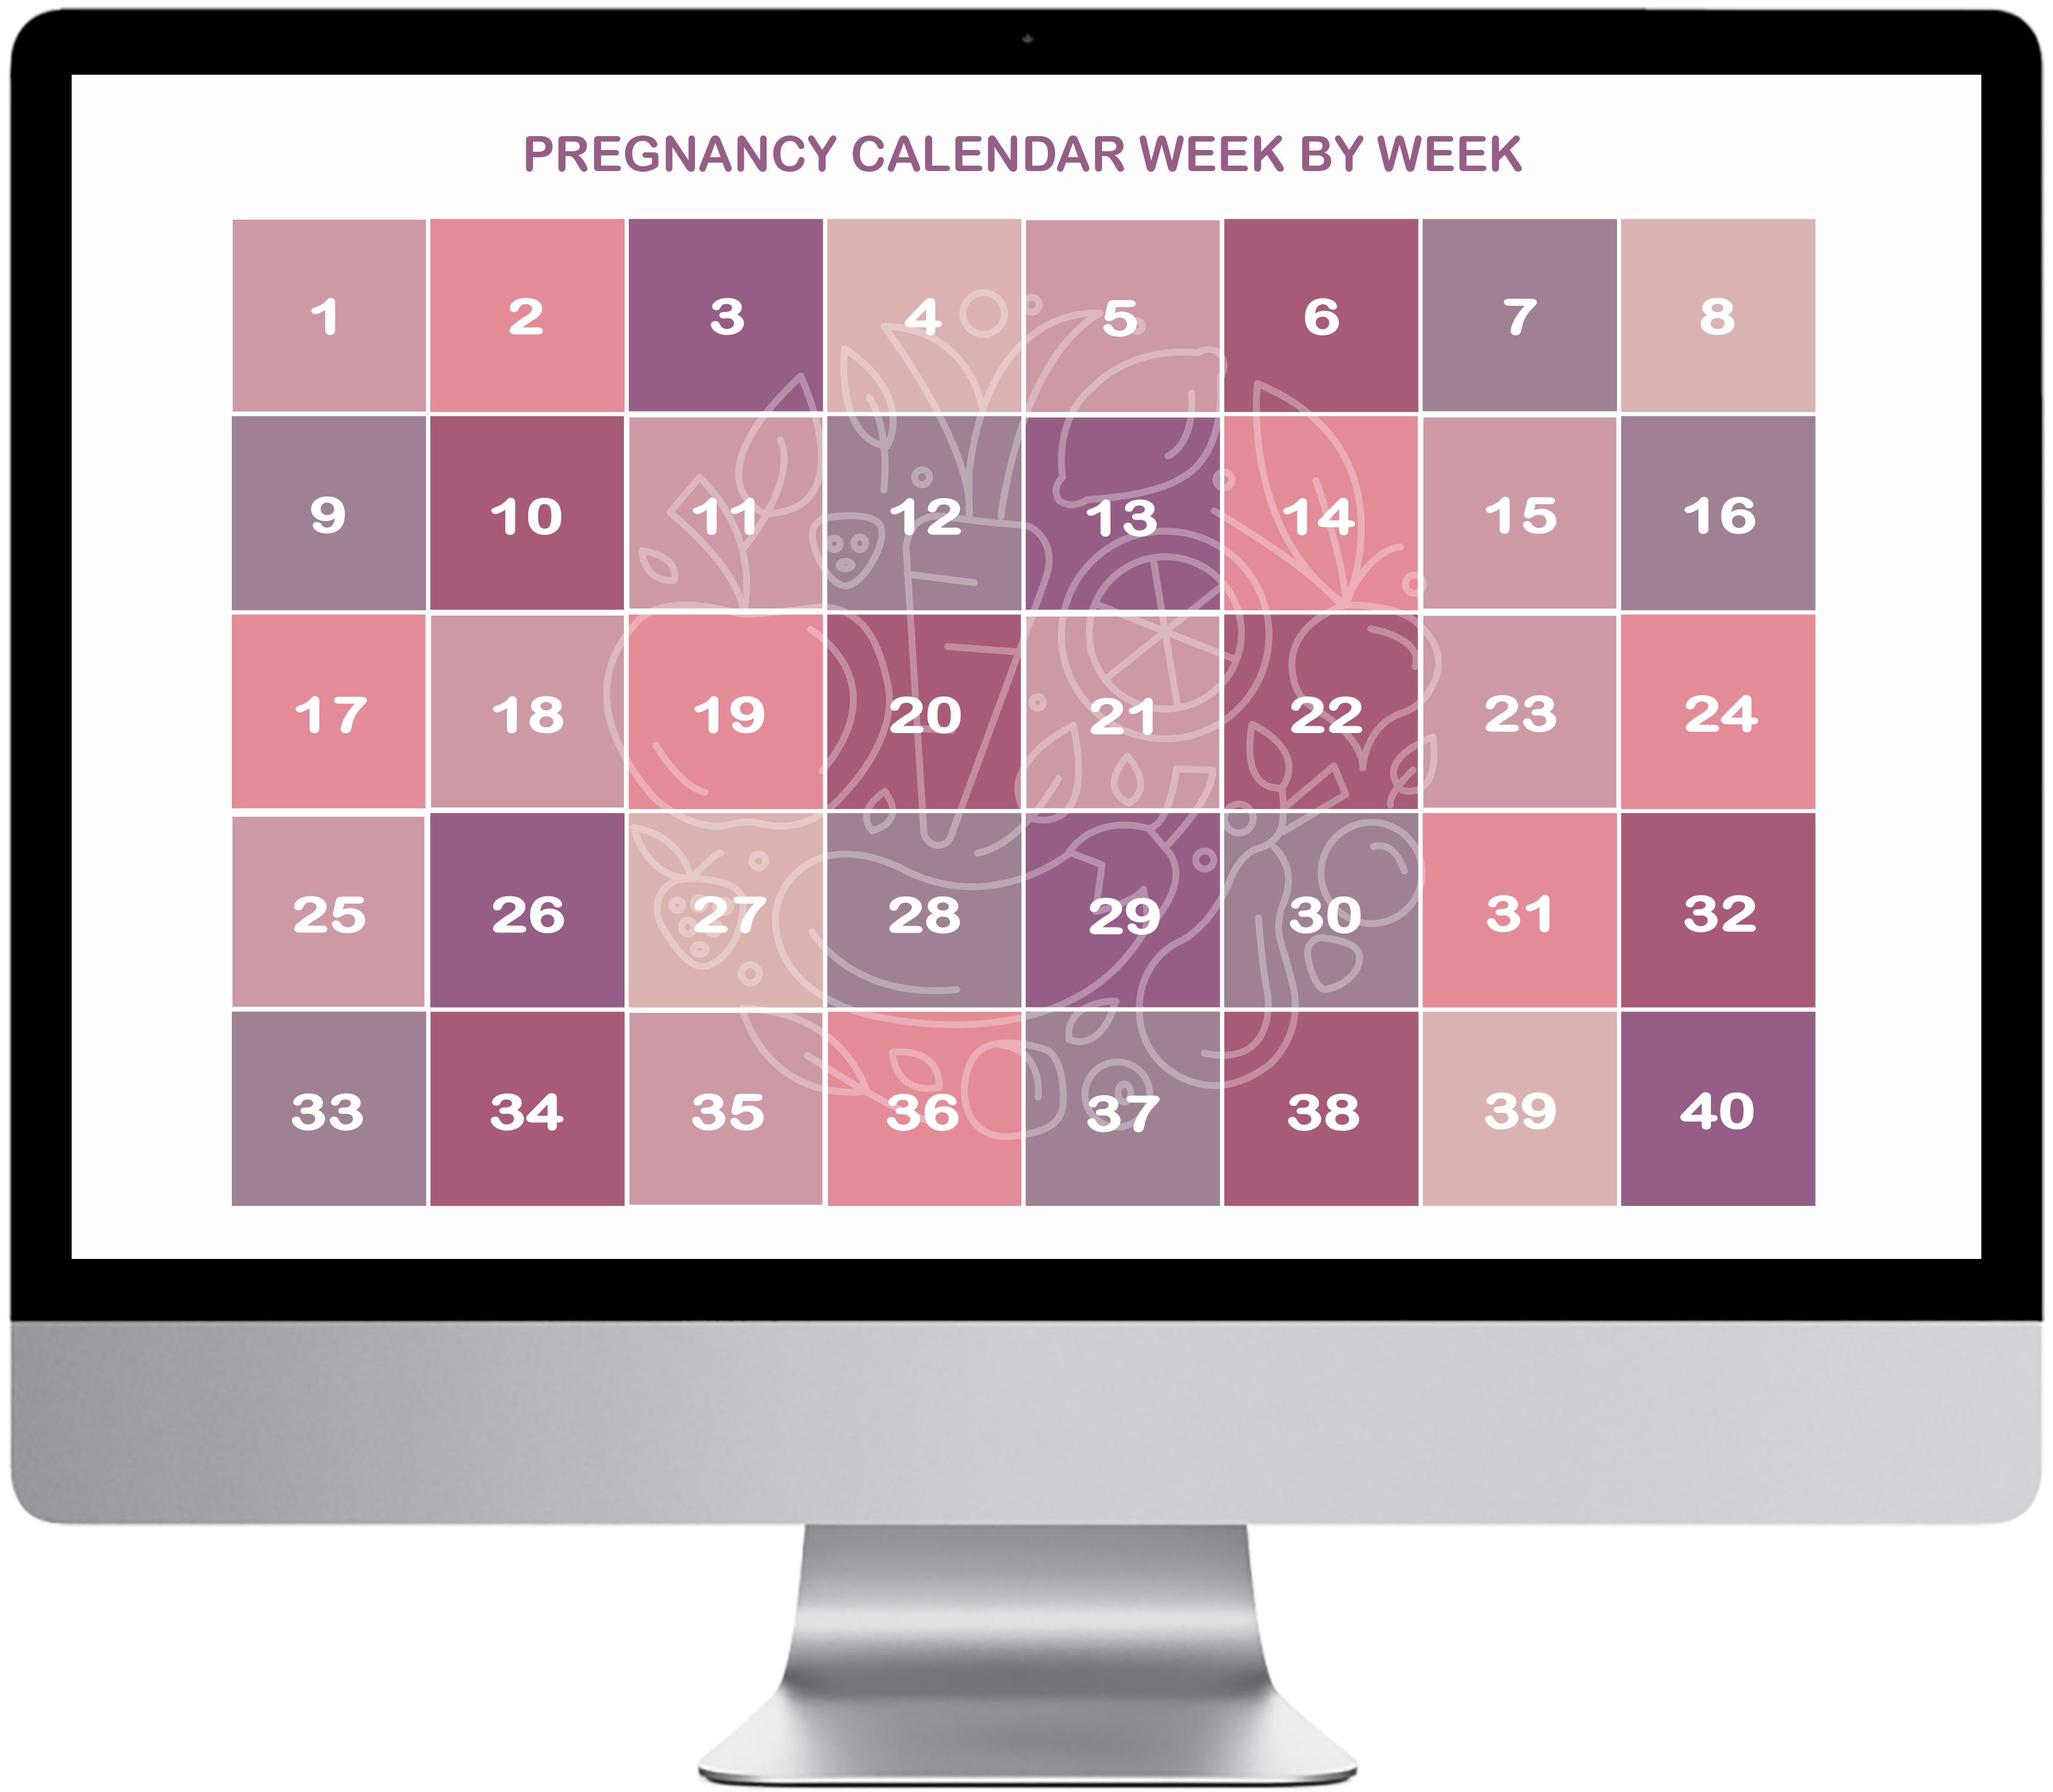 BabyBelly week by week pregnancy calendar with nutrition tips